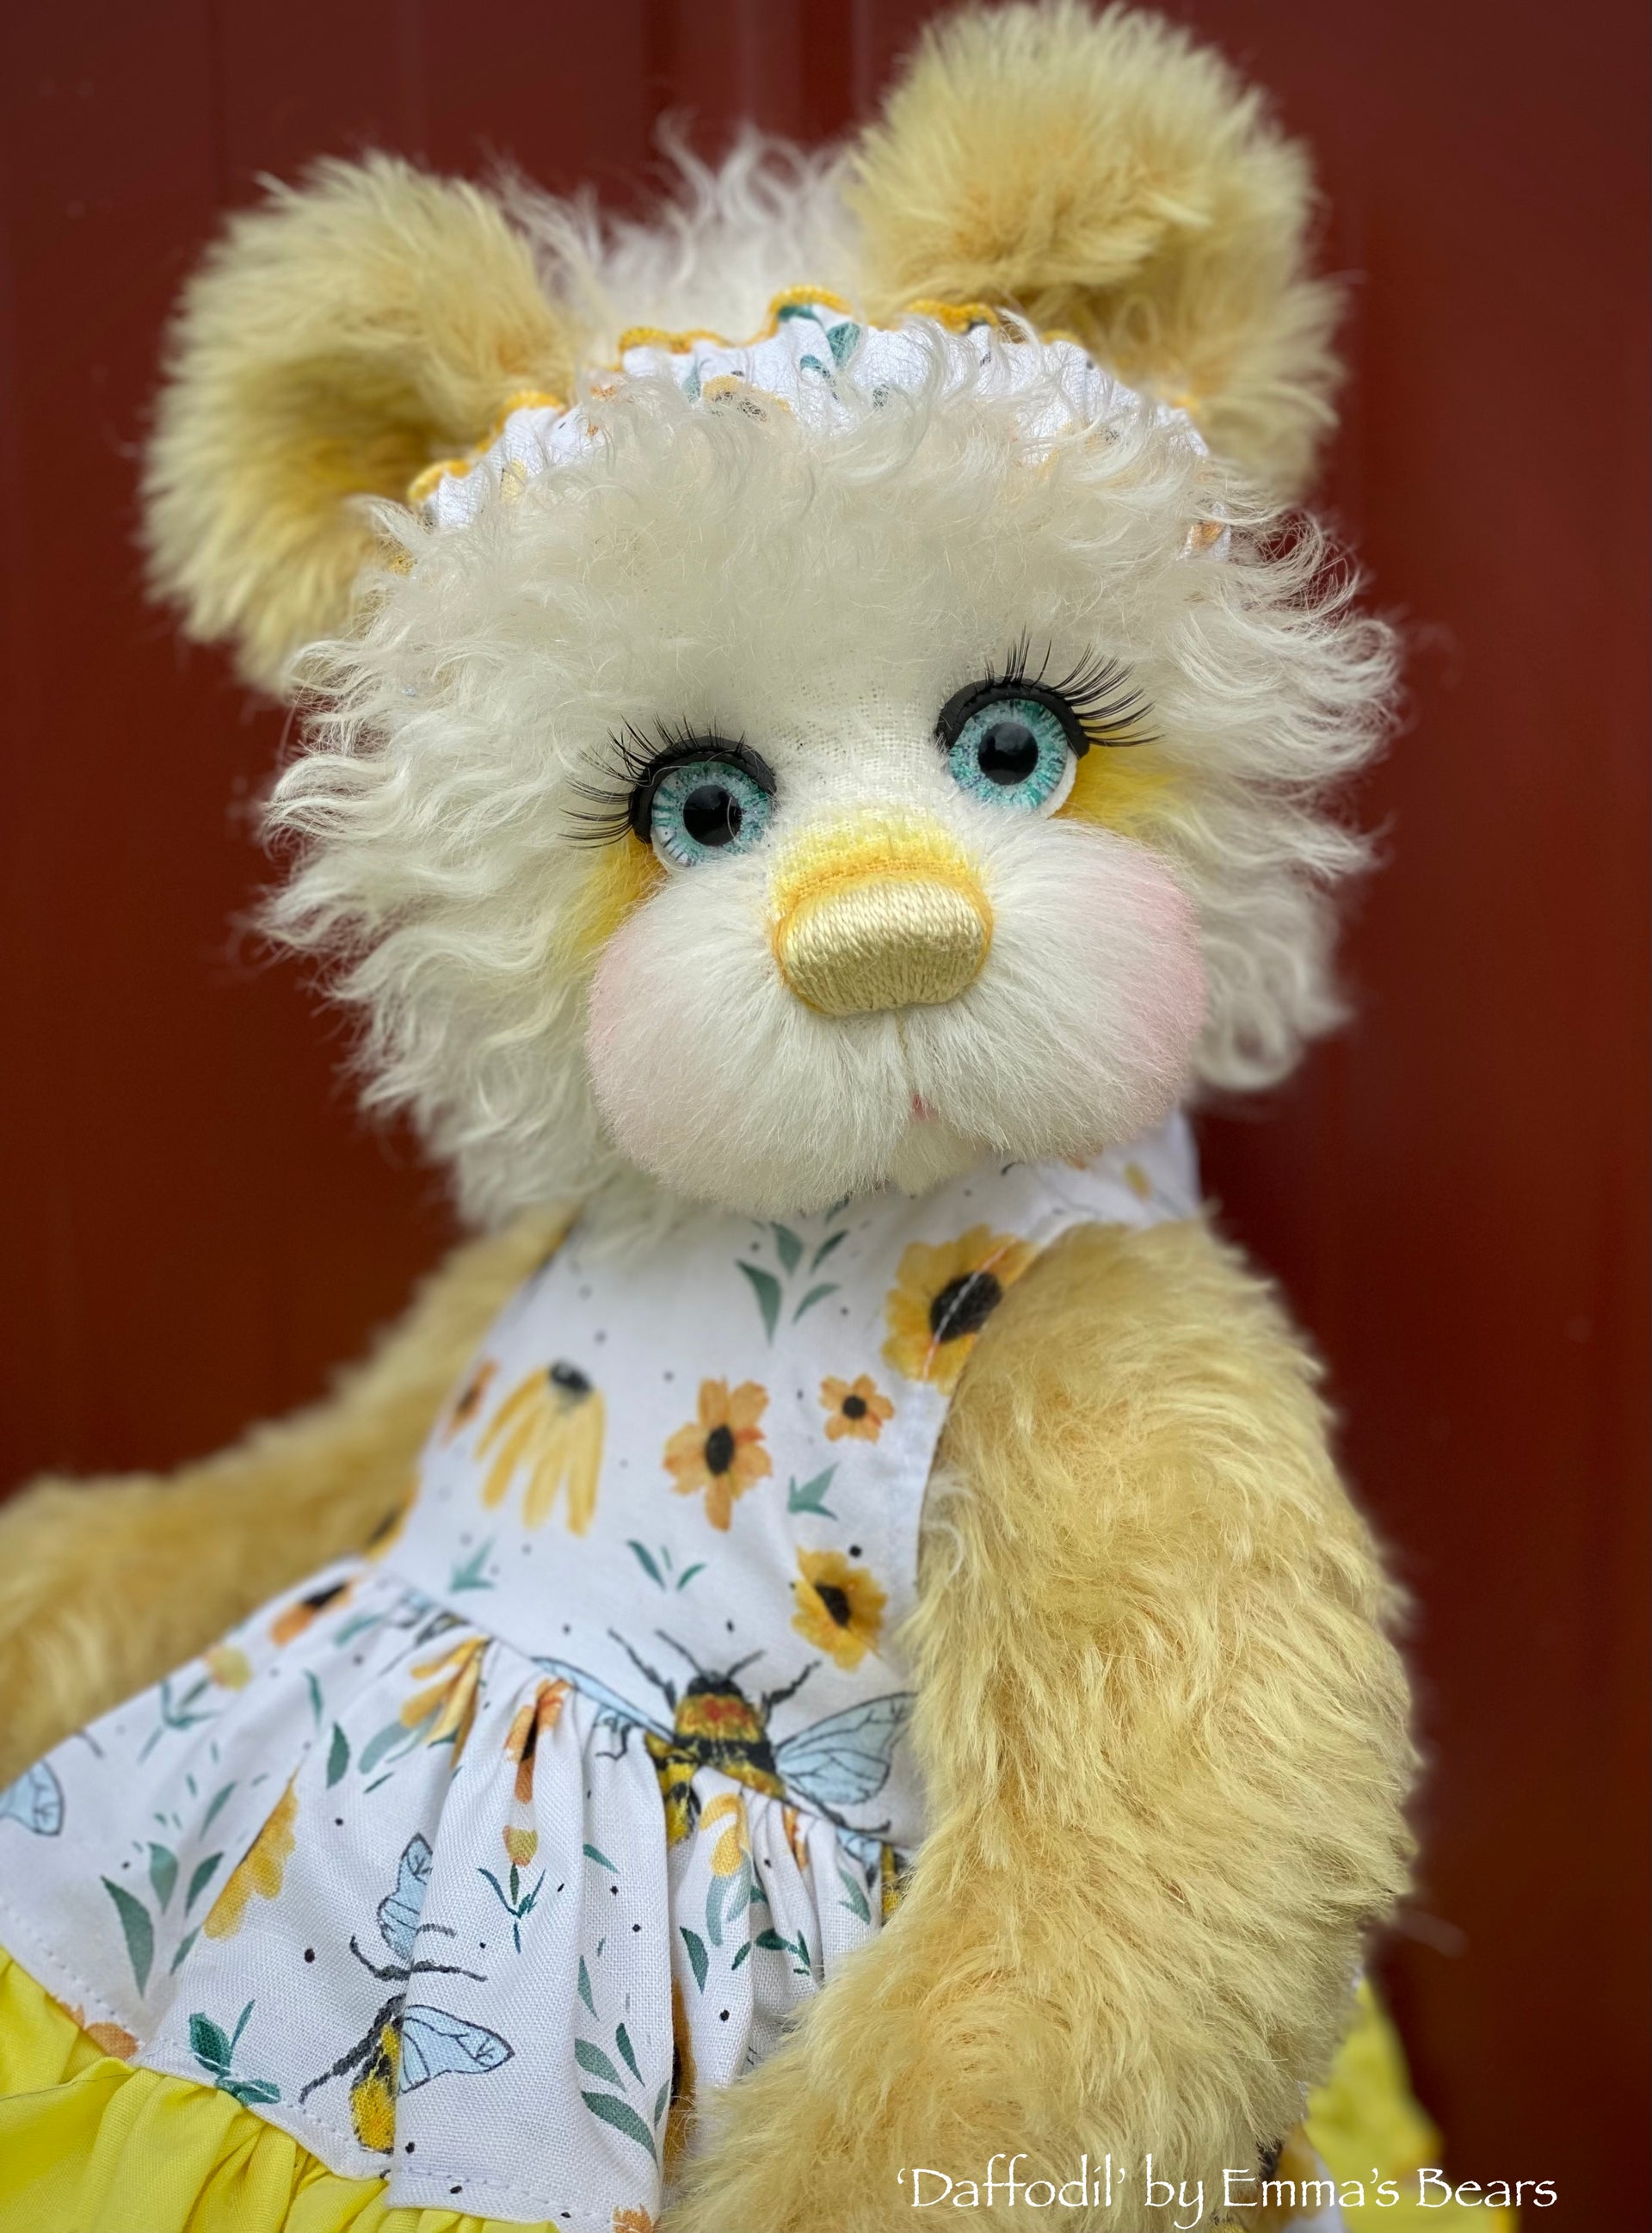 Daffodil - 16" Curlylocks, Mohair and Alpaca artist bear by Emma's Bears - OOAK